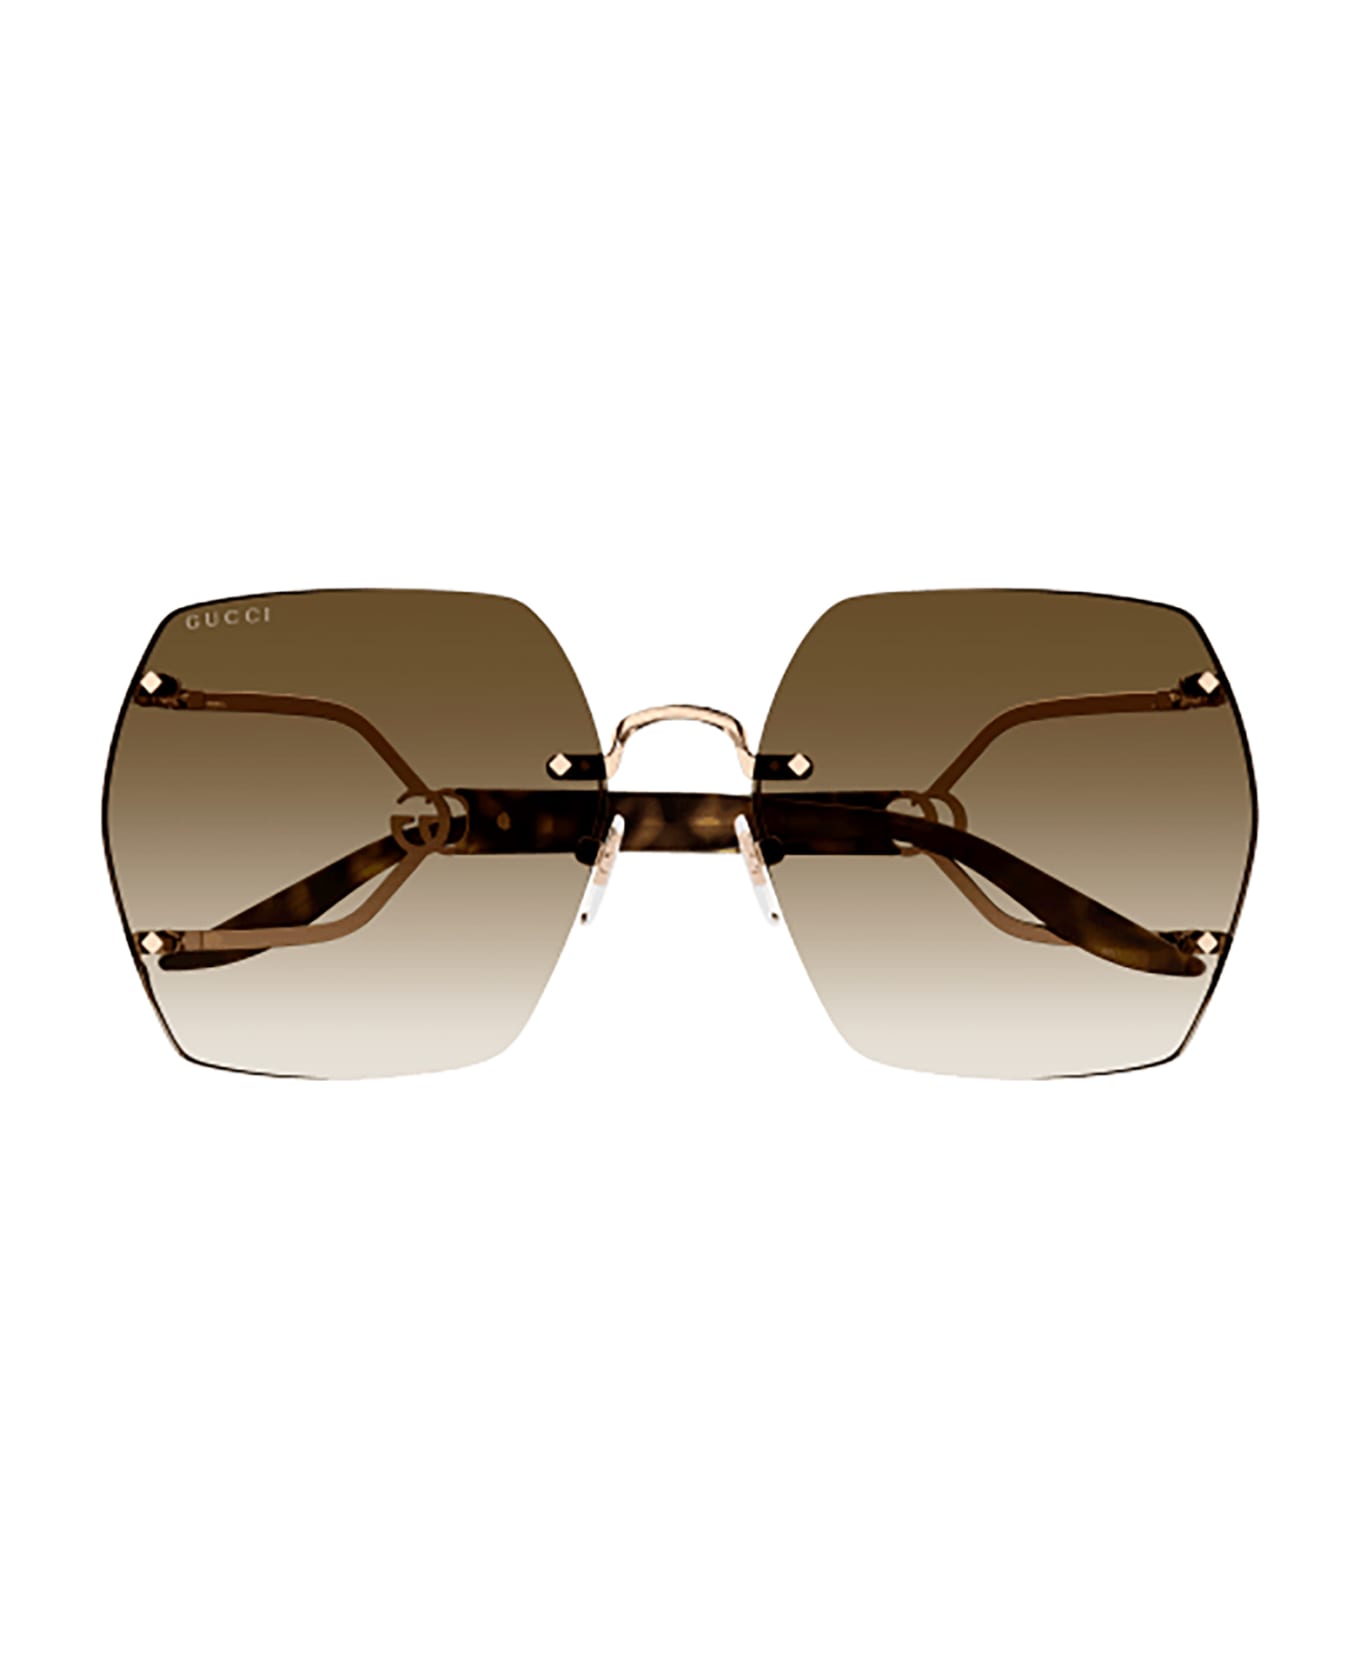 Gucci Eyewear GG1562S Sunglasses - Gold Havana Brown